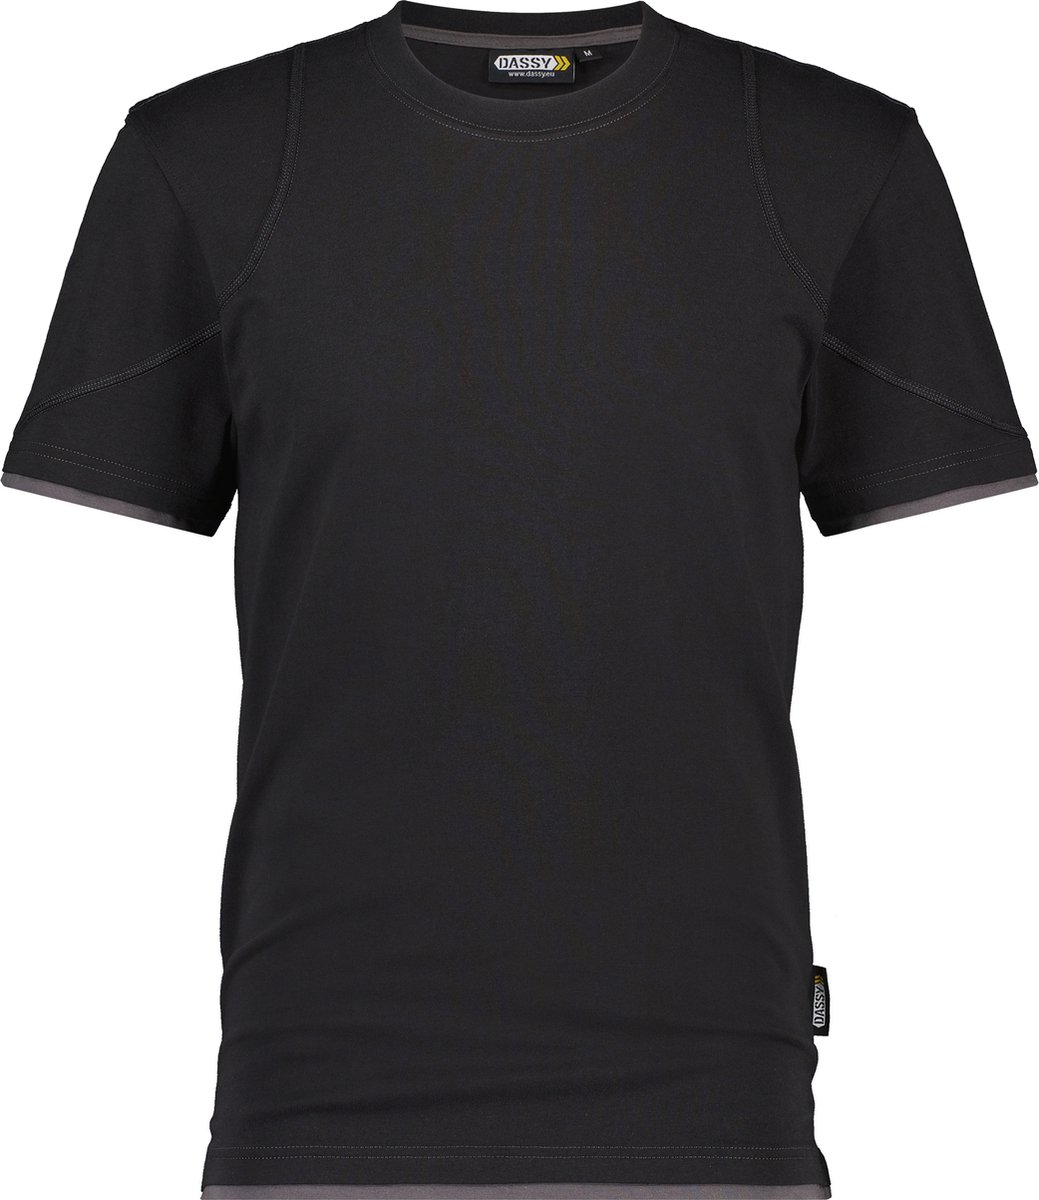 DASSY® Kinetic T-shirt - maat XL - ZWART/ANTRACIETGRIJS